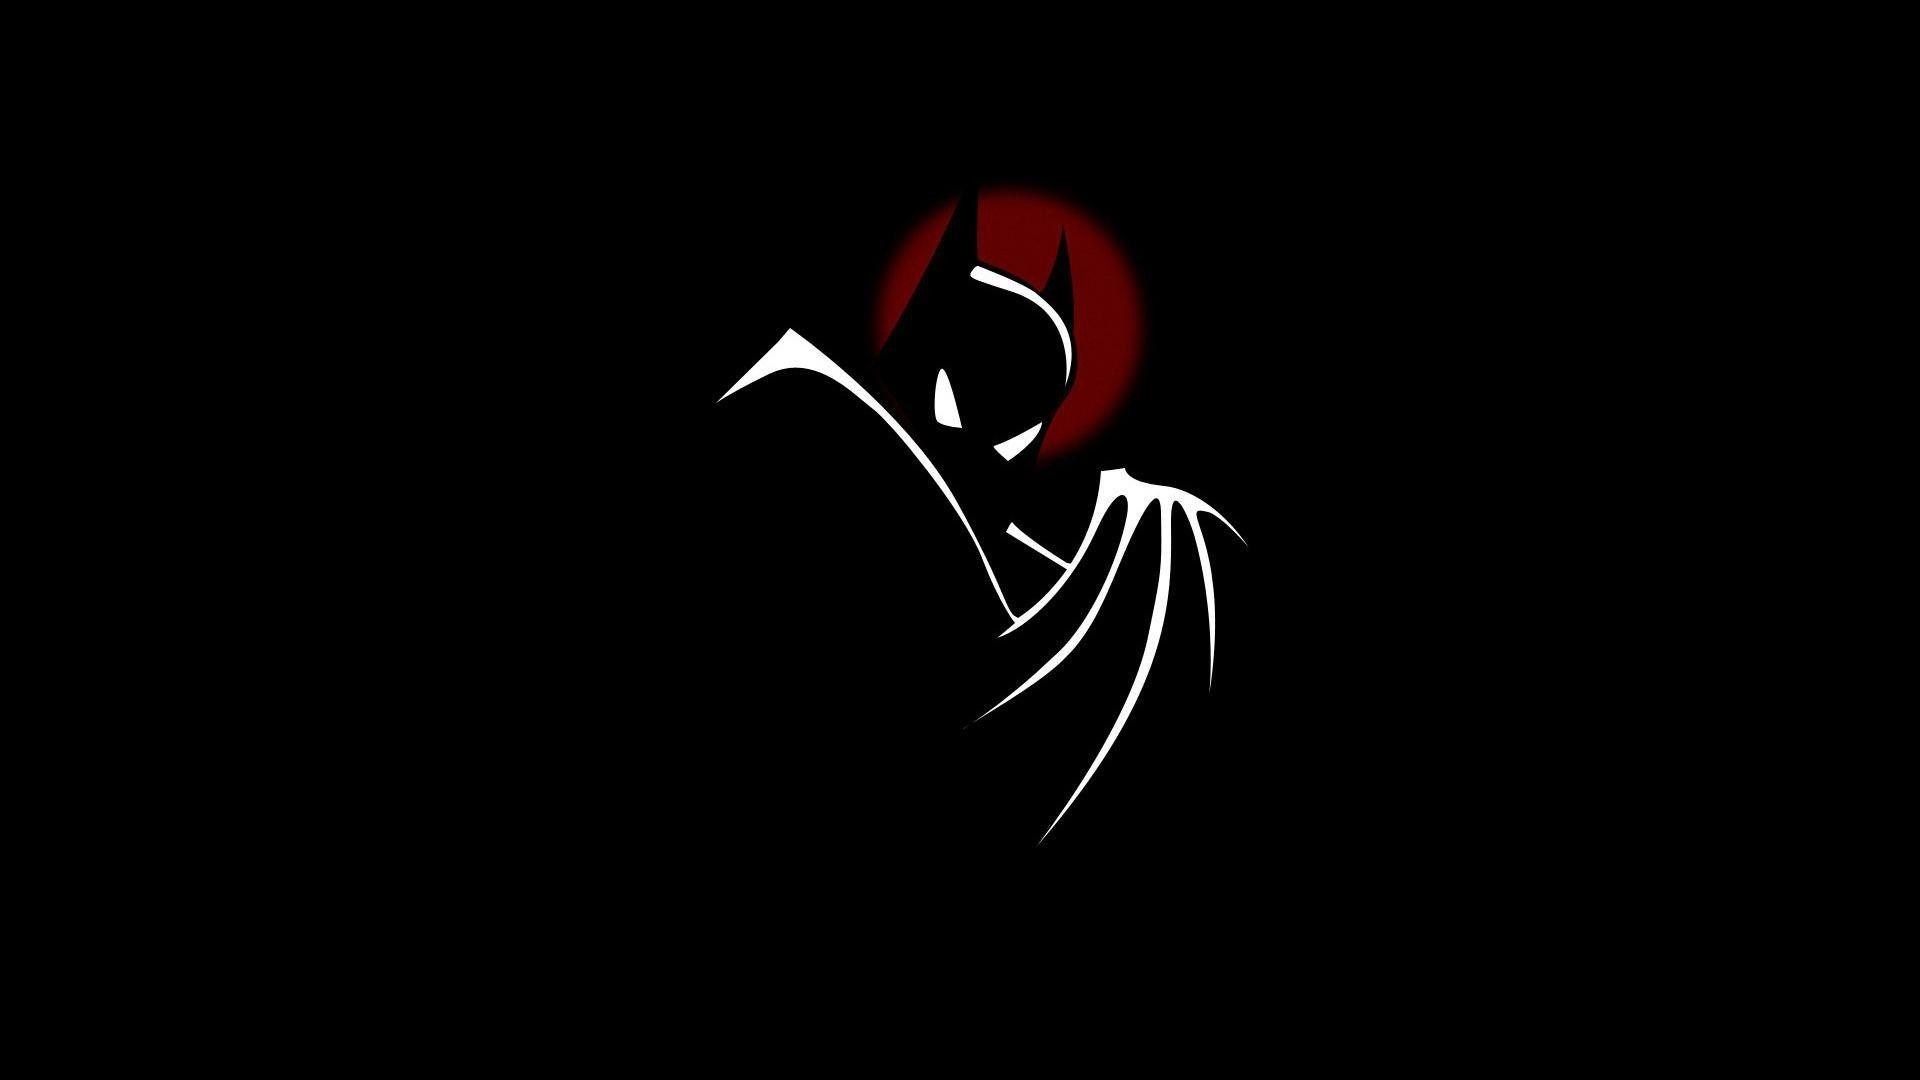 batman screensavers and background free. Batman wallpaper